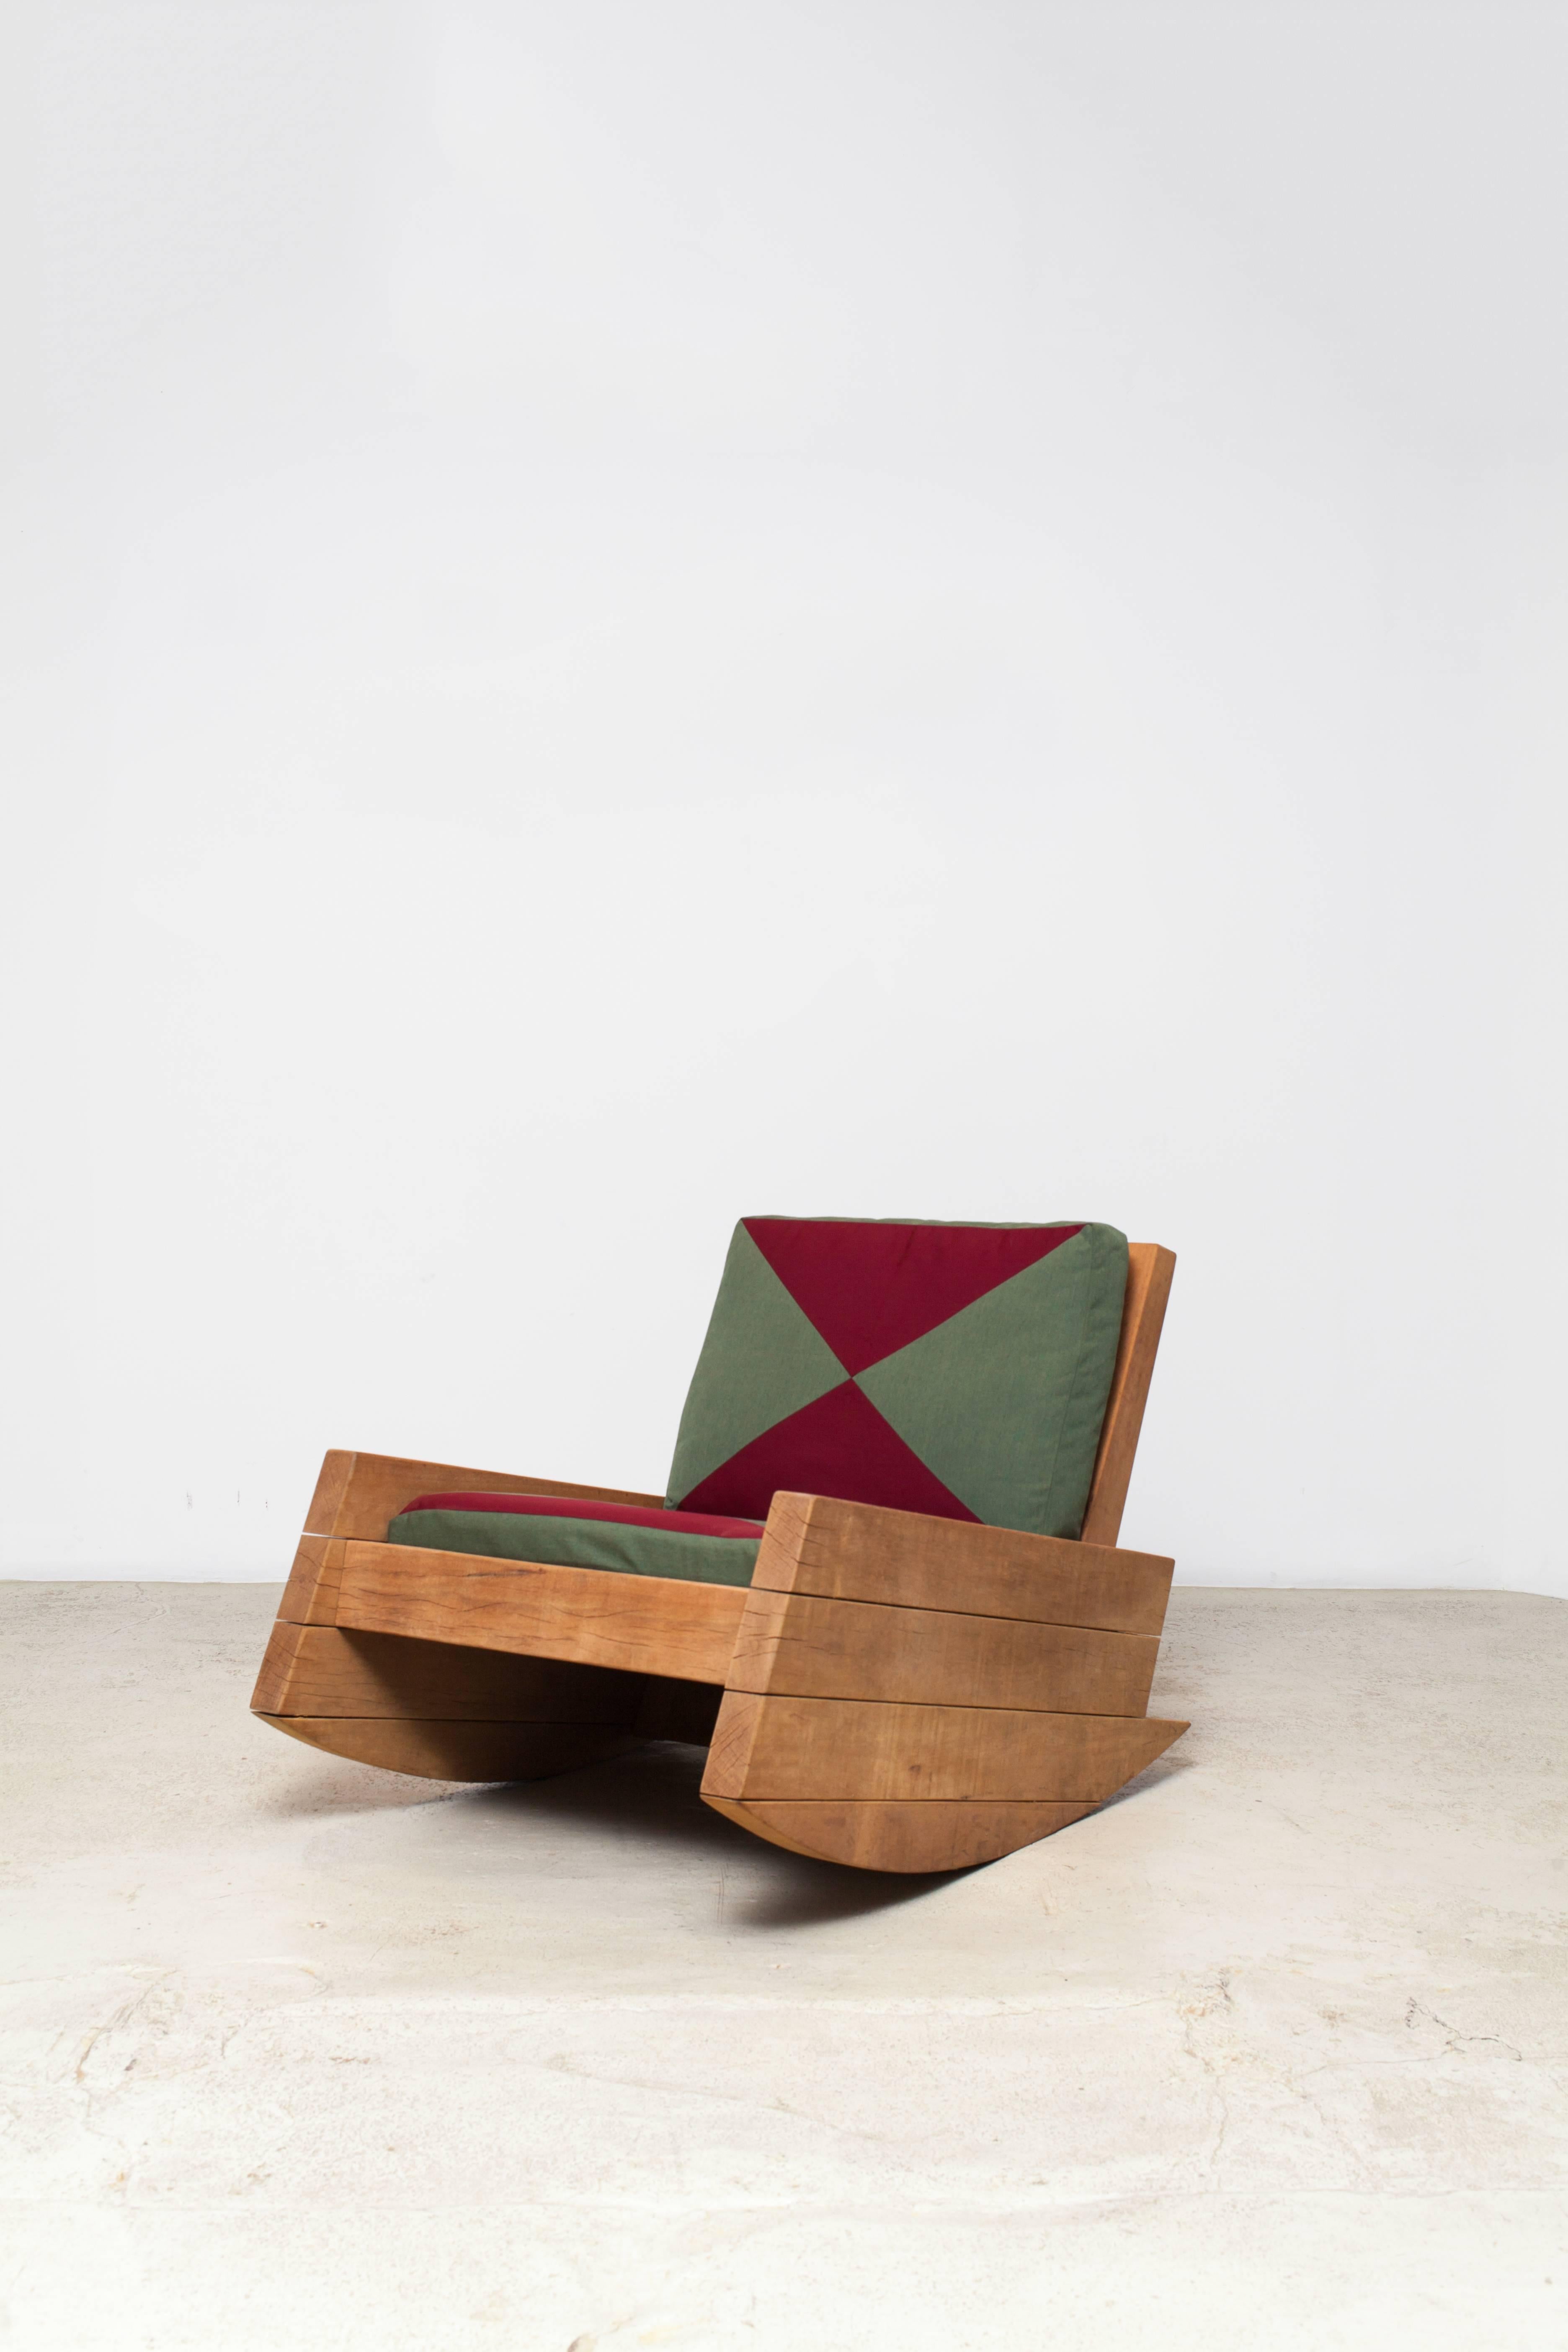 'Asturias' rocking chair by Carlos Motta.
Made of reclaimed Itauba wood.